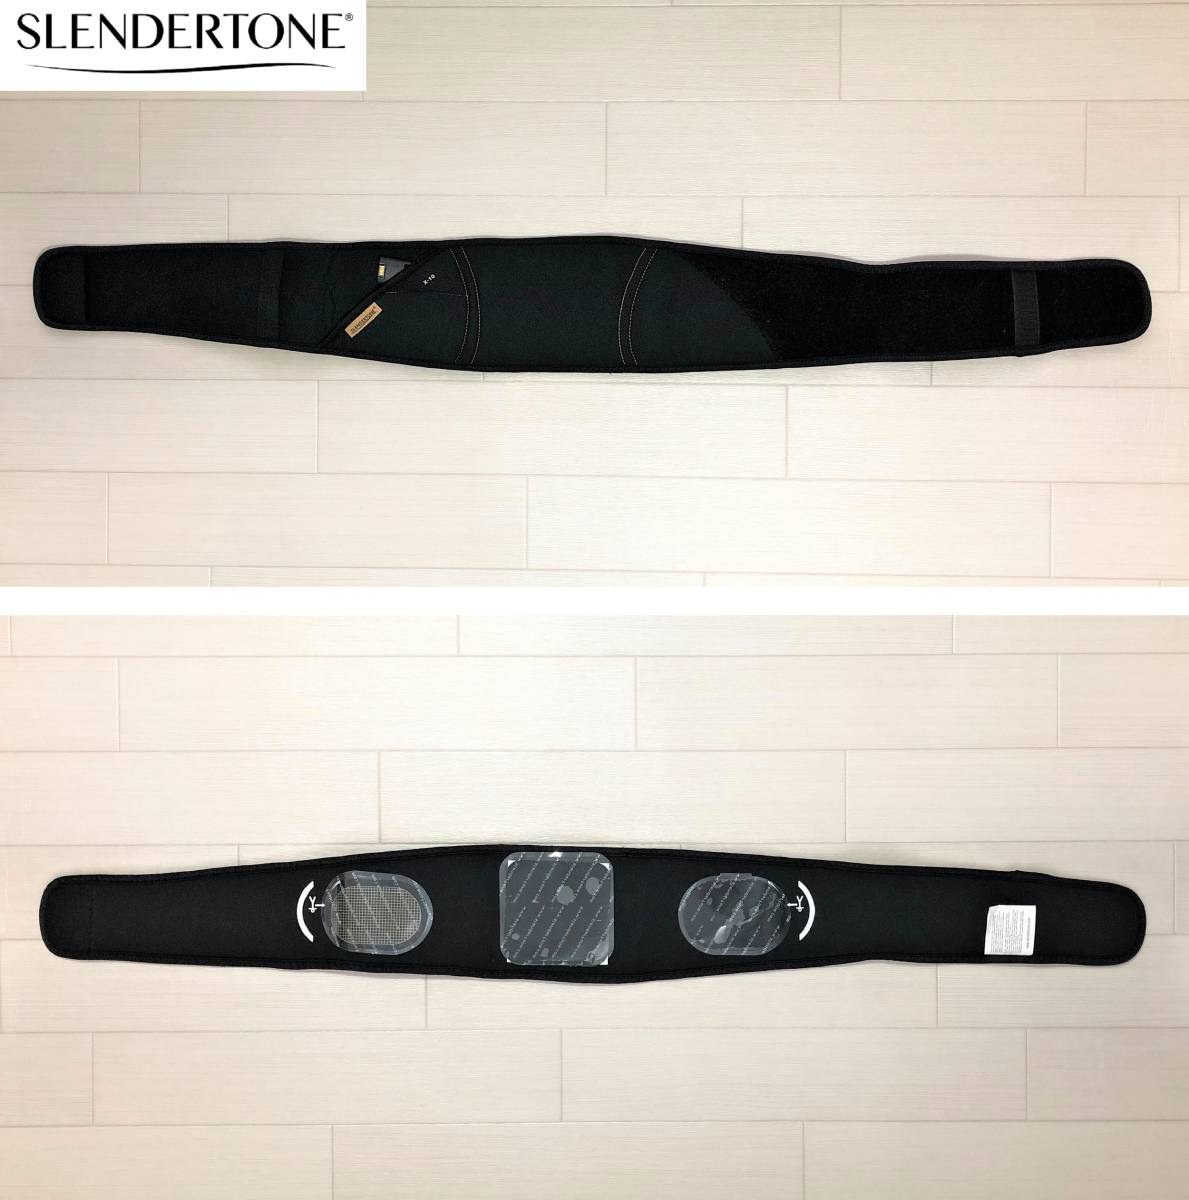 SLENDERTONE X-10 スレンダートーン 男性用 腹囲69〜100cm 腹筋ベルト 筋トレ エクササイズ BMR社